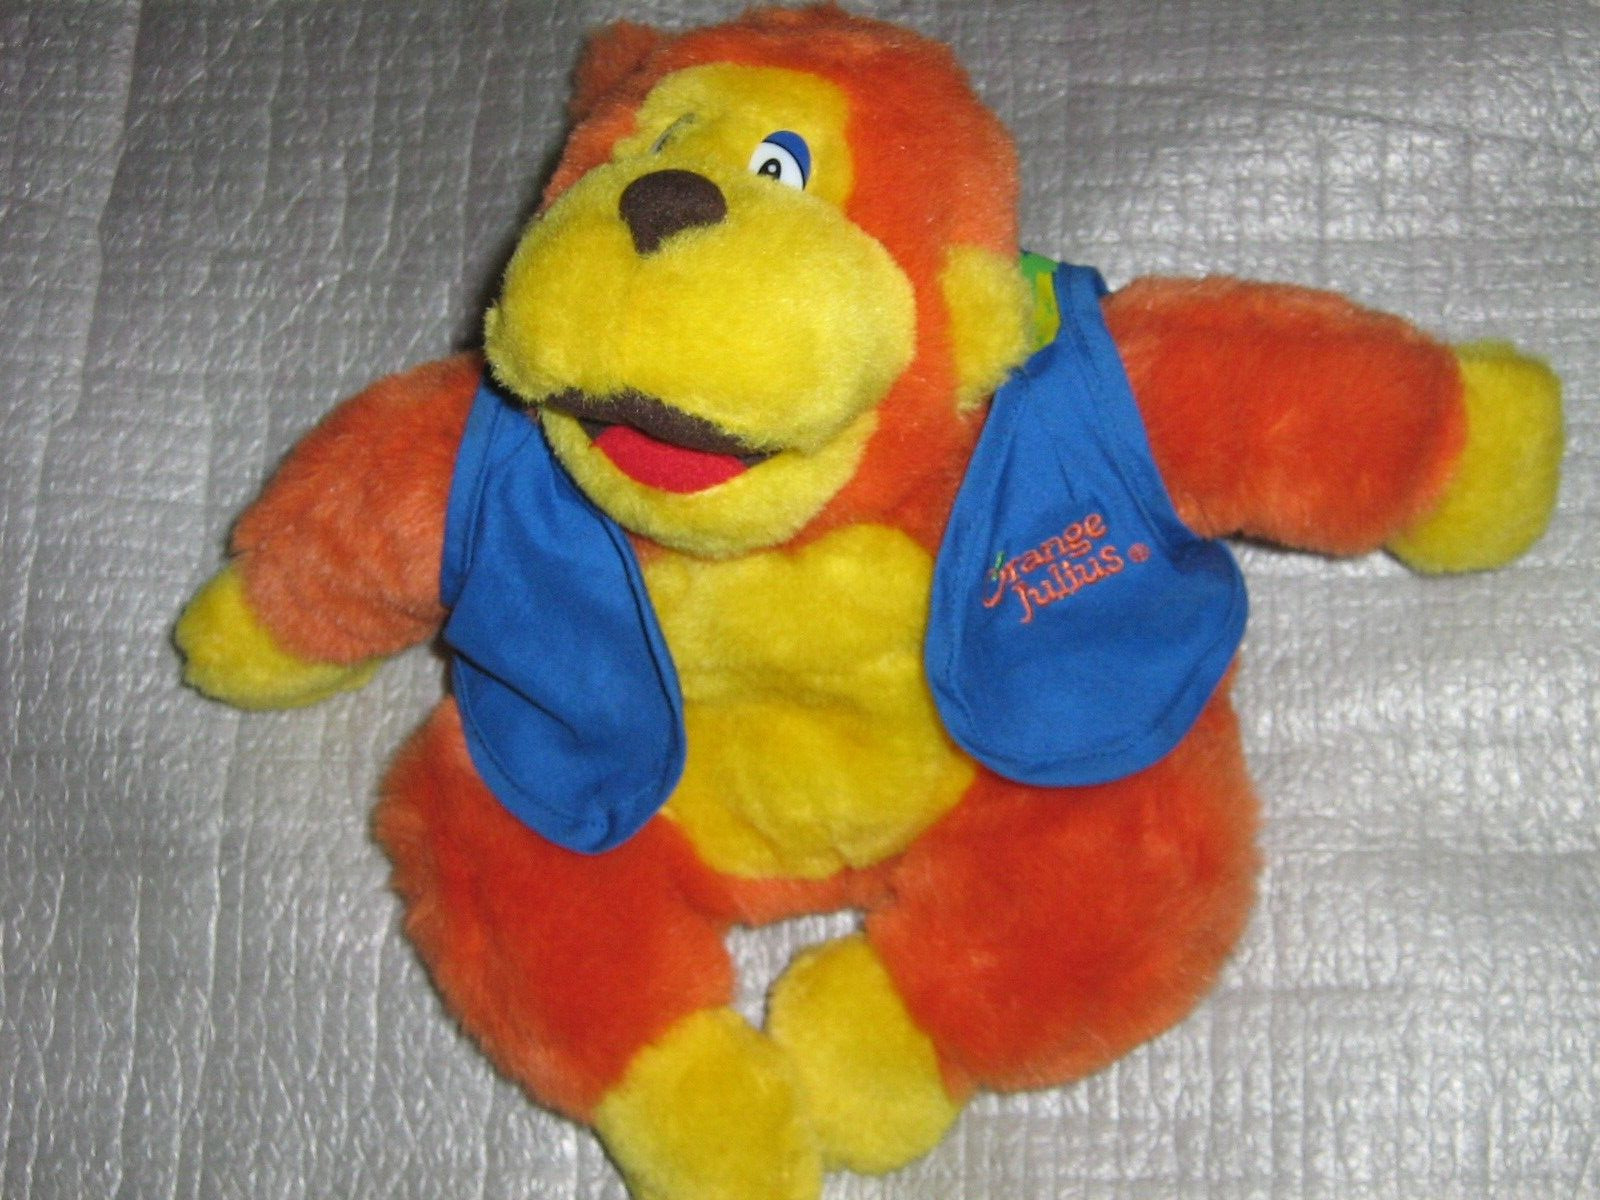 Orange Julius of America Monkey Orangutan Plush Stuffed Animal w/ Fruit Vest 99\'